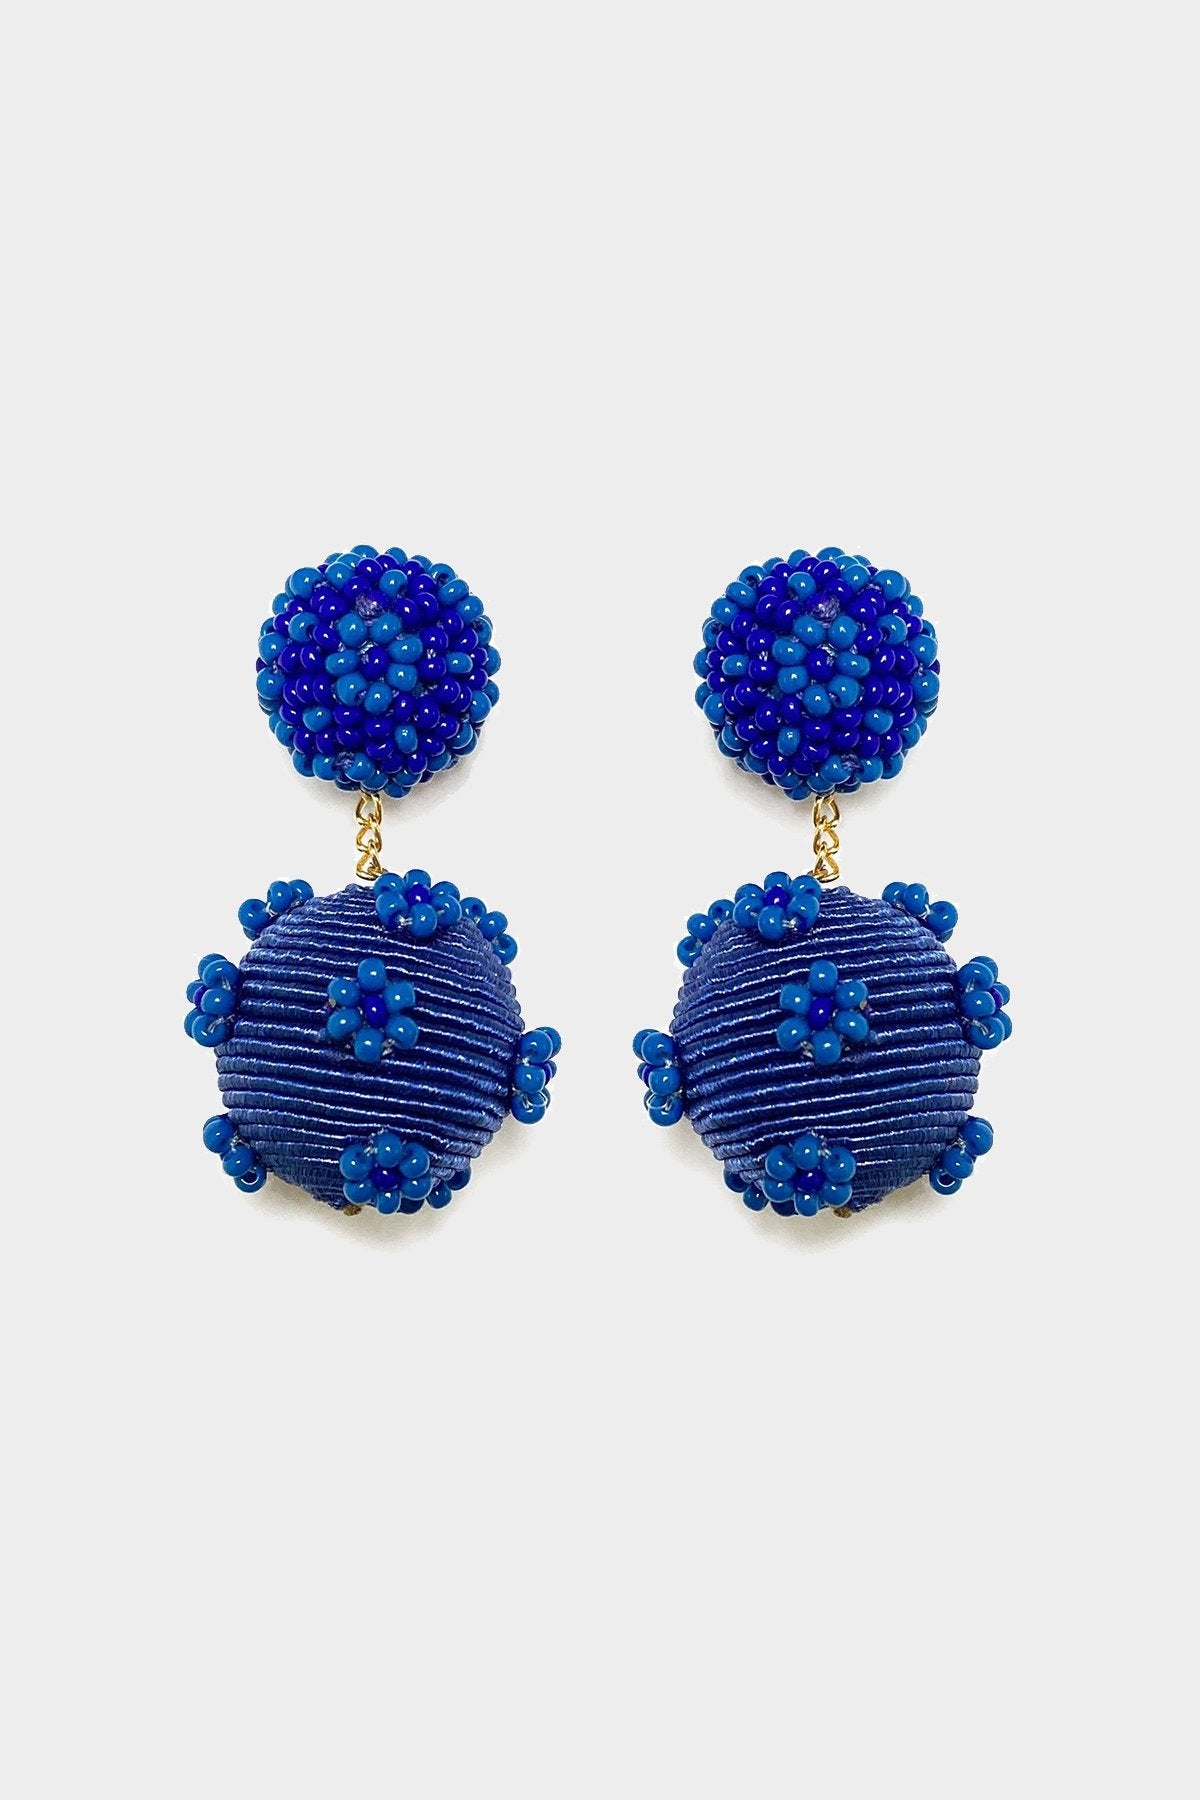 Marguerite Gumball Earrings in Indigo Blue - shop-olivia.com